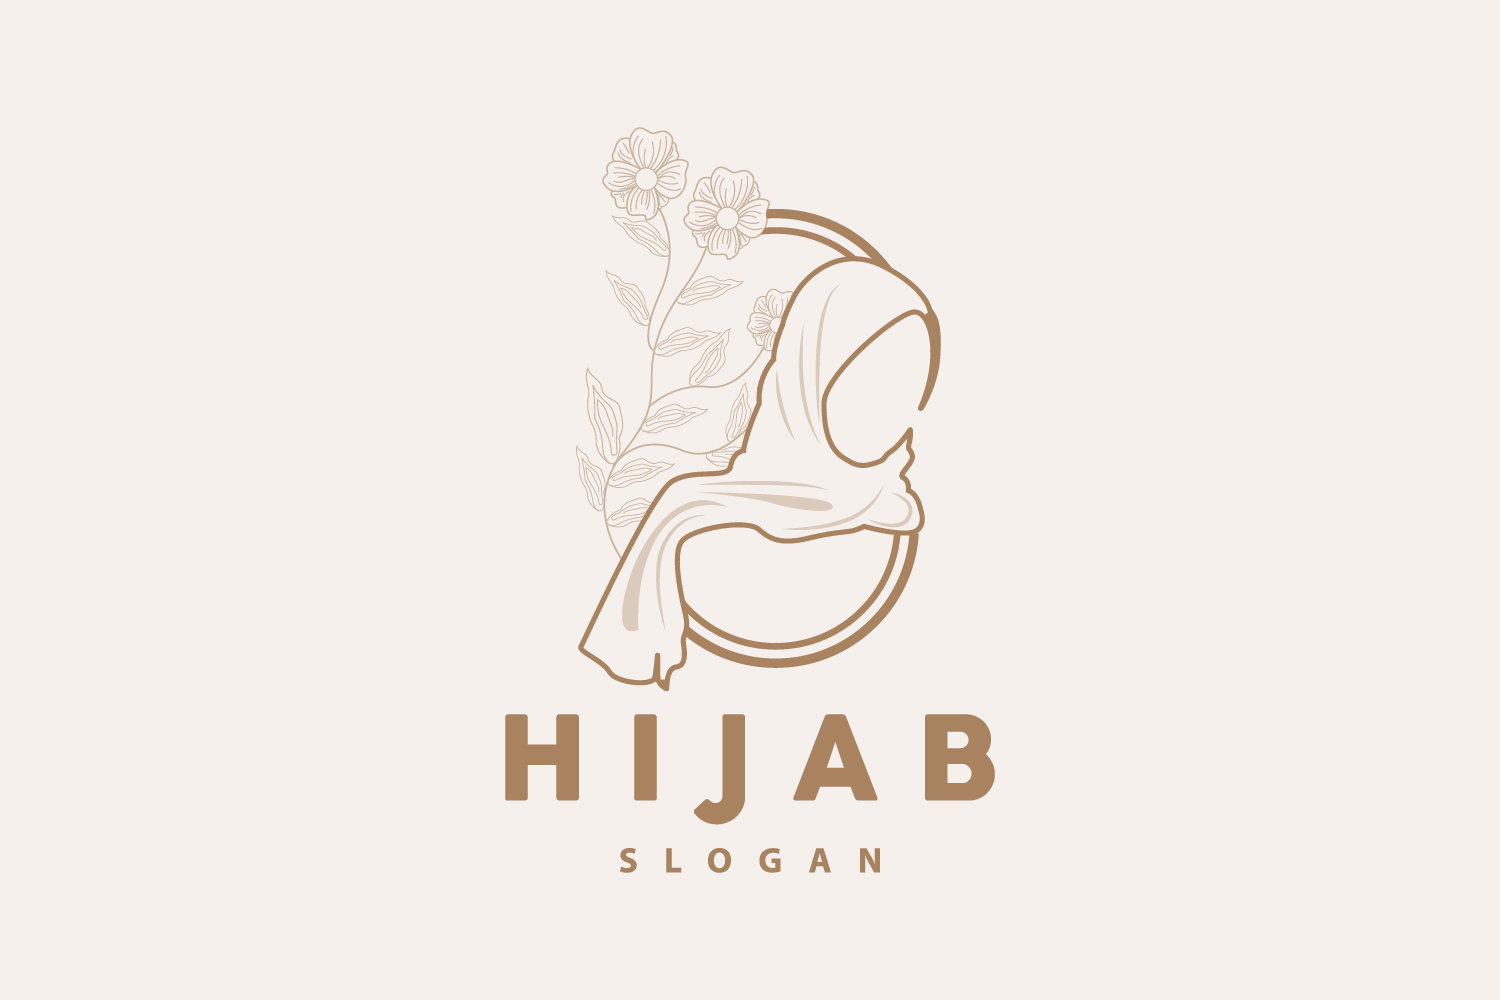 HIjab Logo Fashion Product Vector Version13